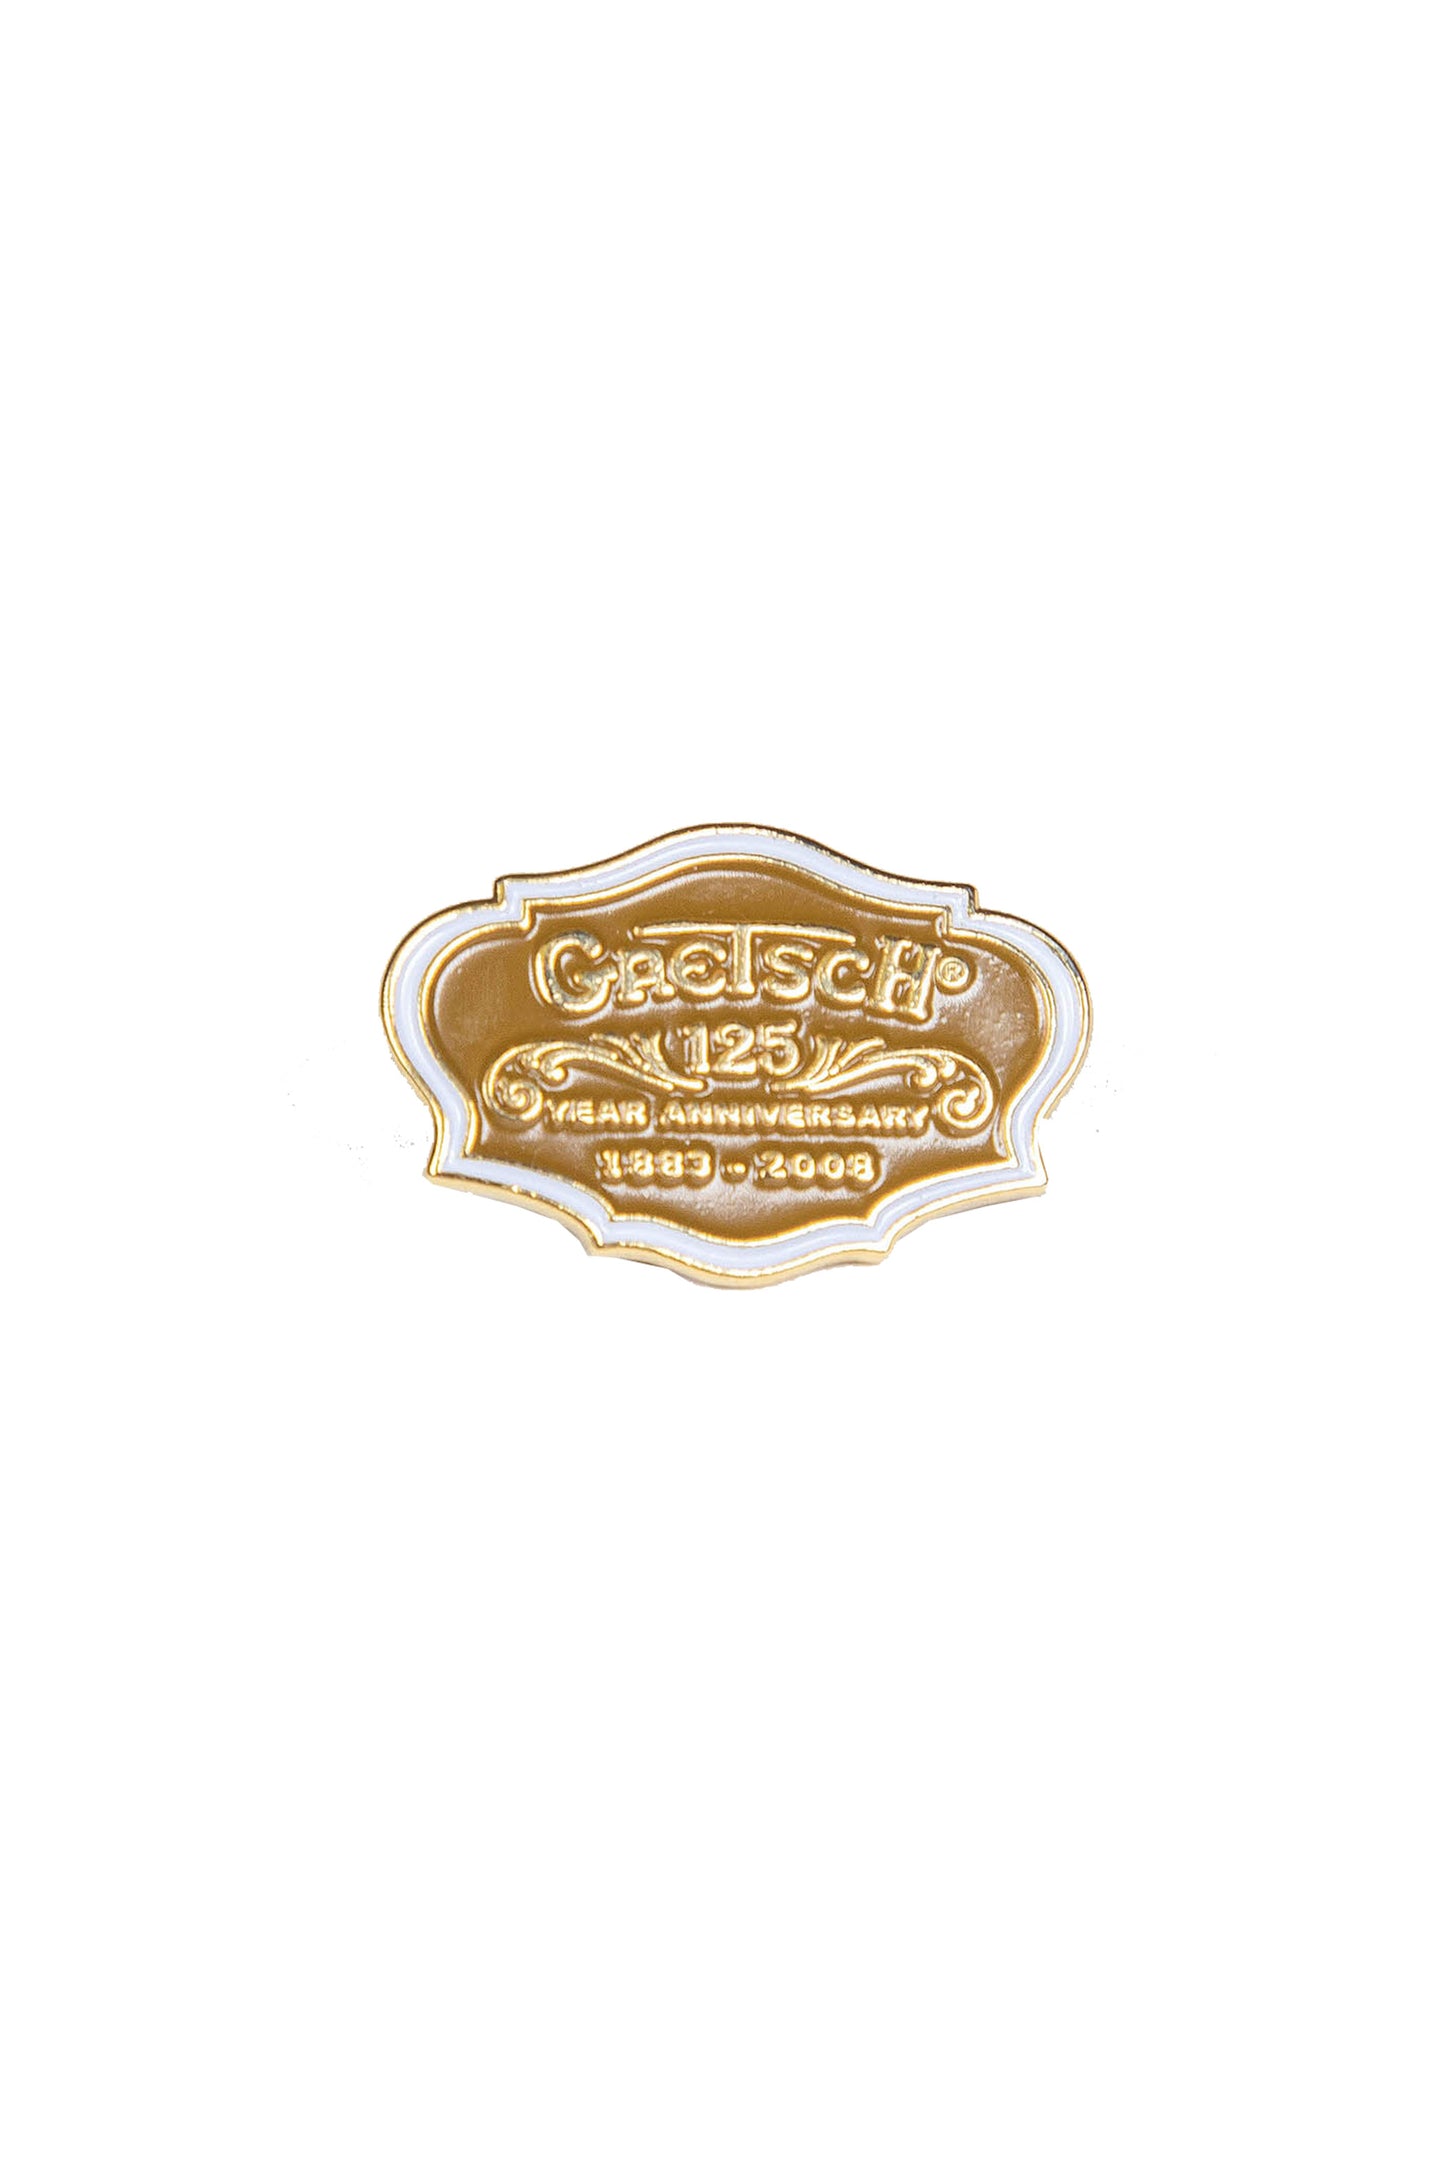 125th Anniversary Crest Lapel Pin - GretschGear